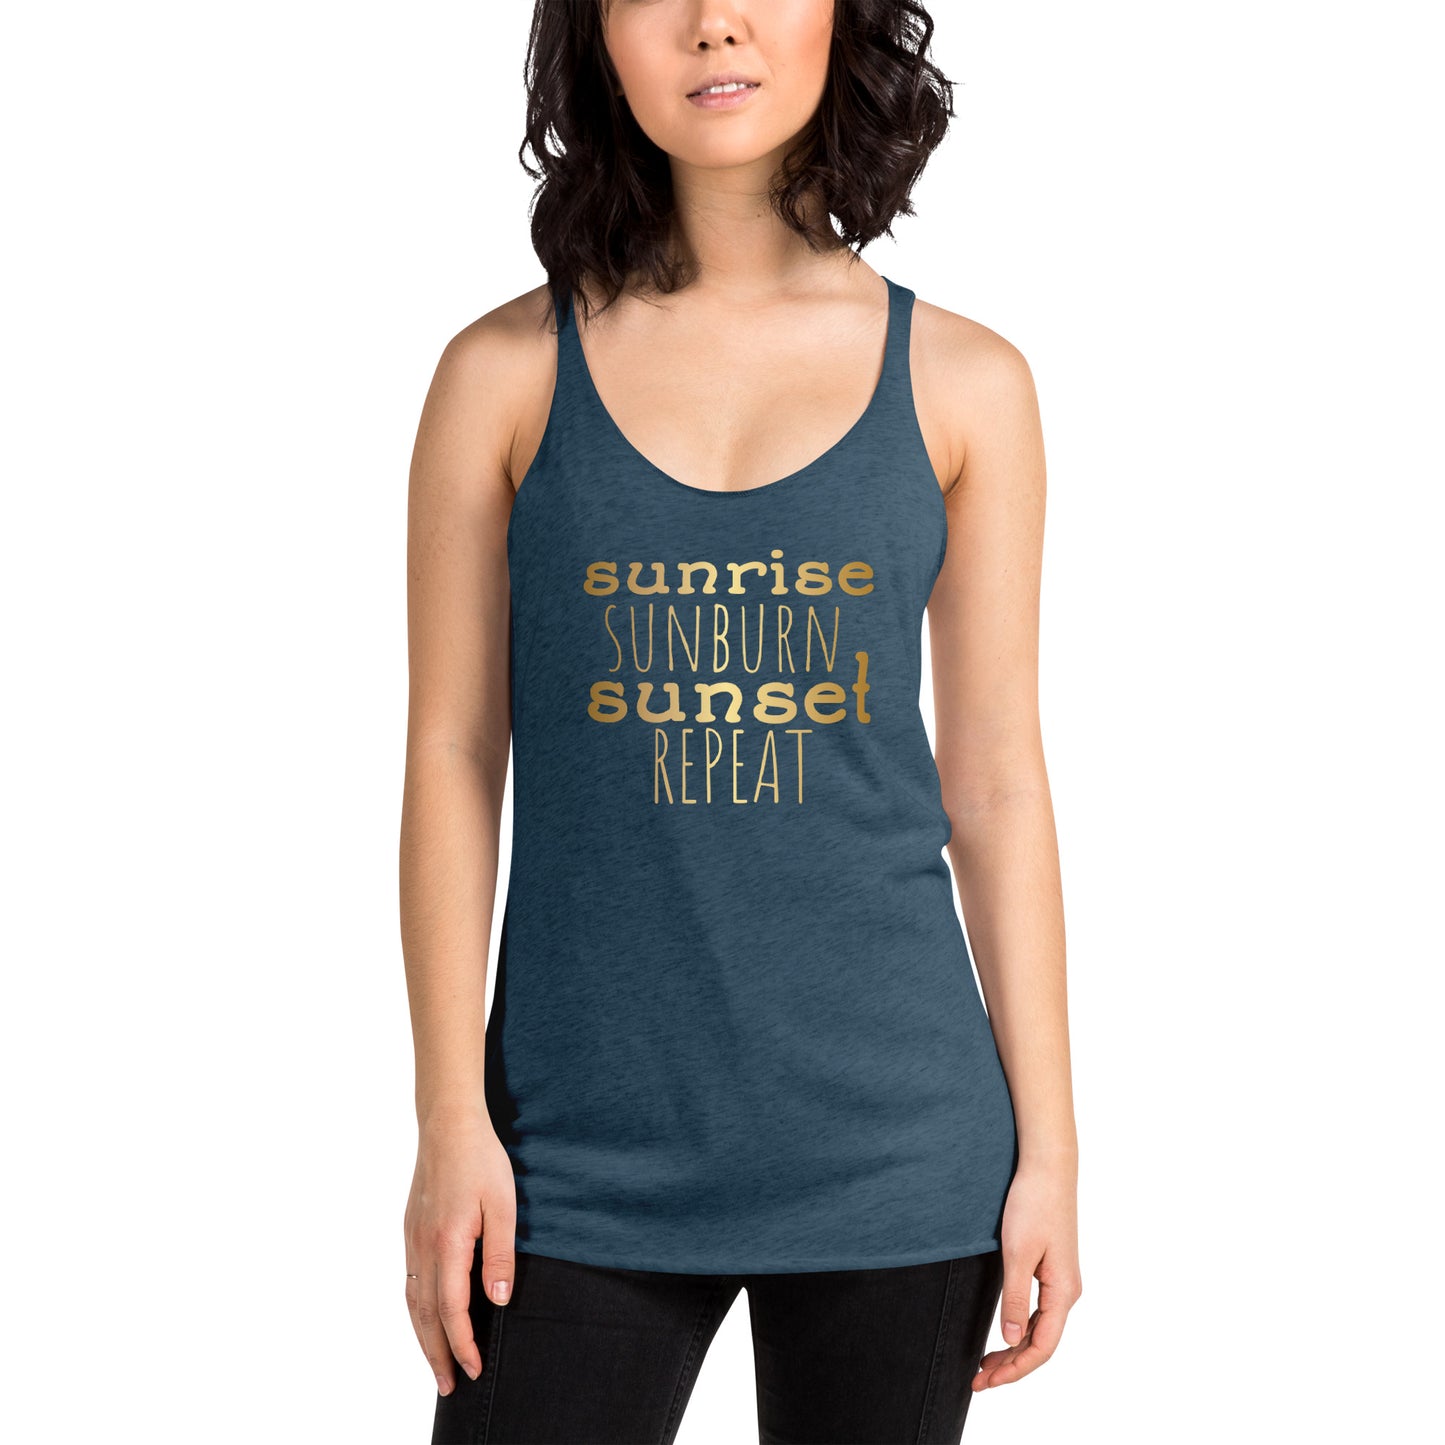 Women's Racerback Tank -Sunrise Sunburn Sunset Repeat Gold